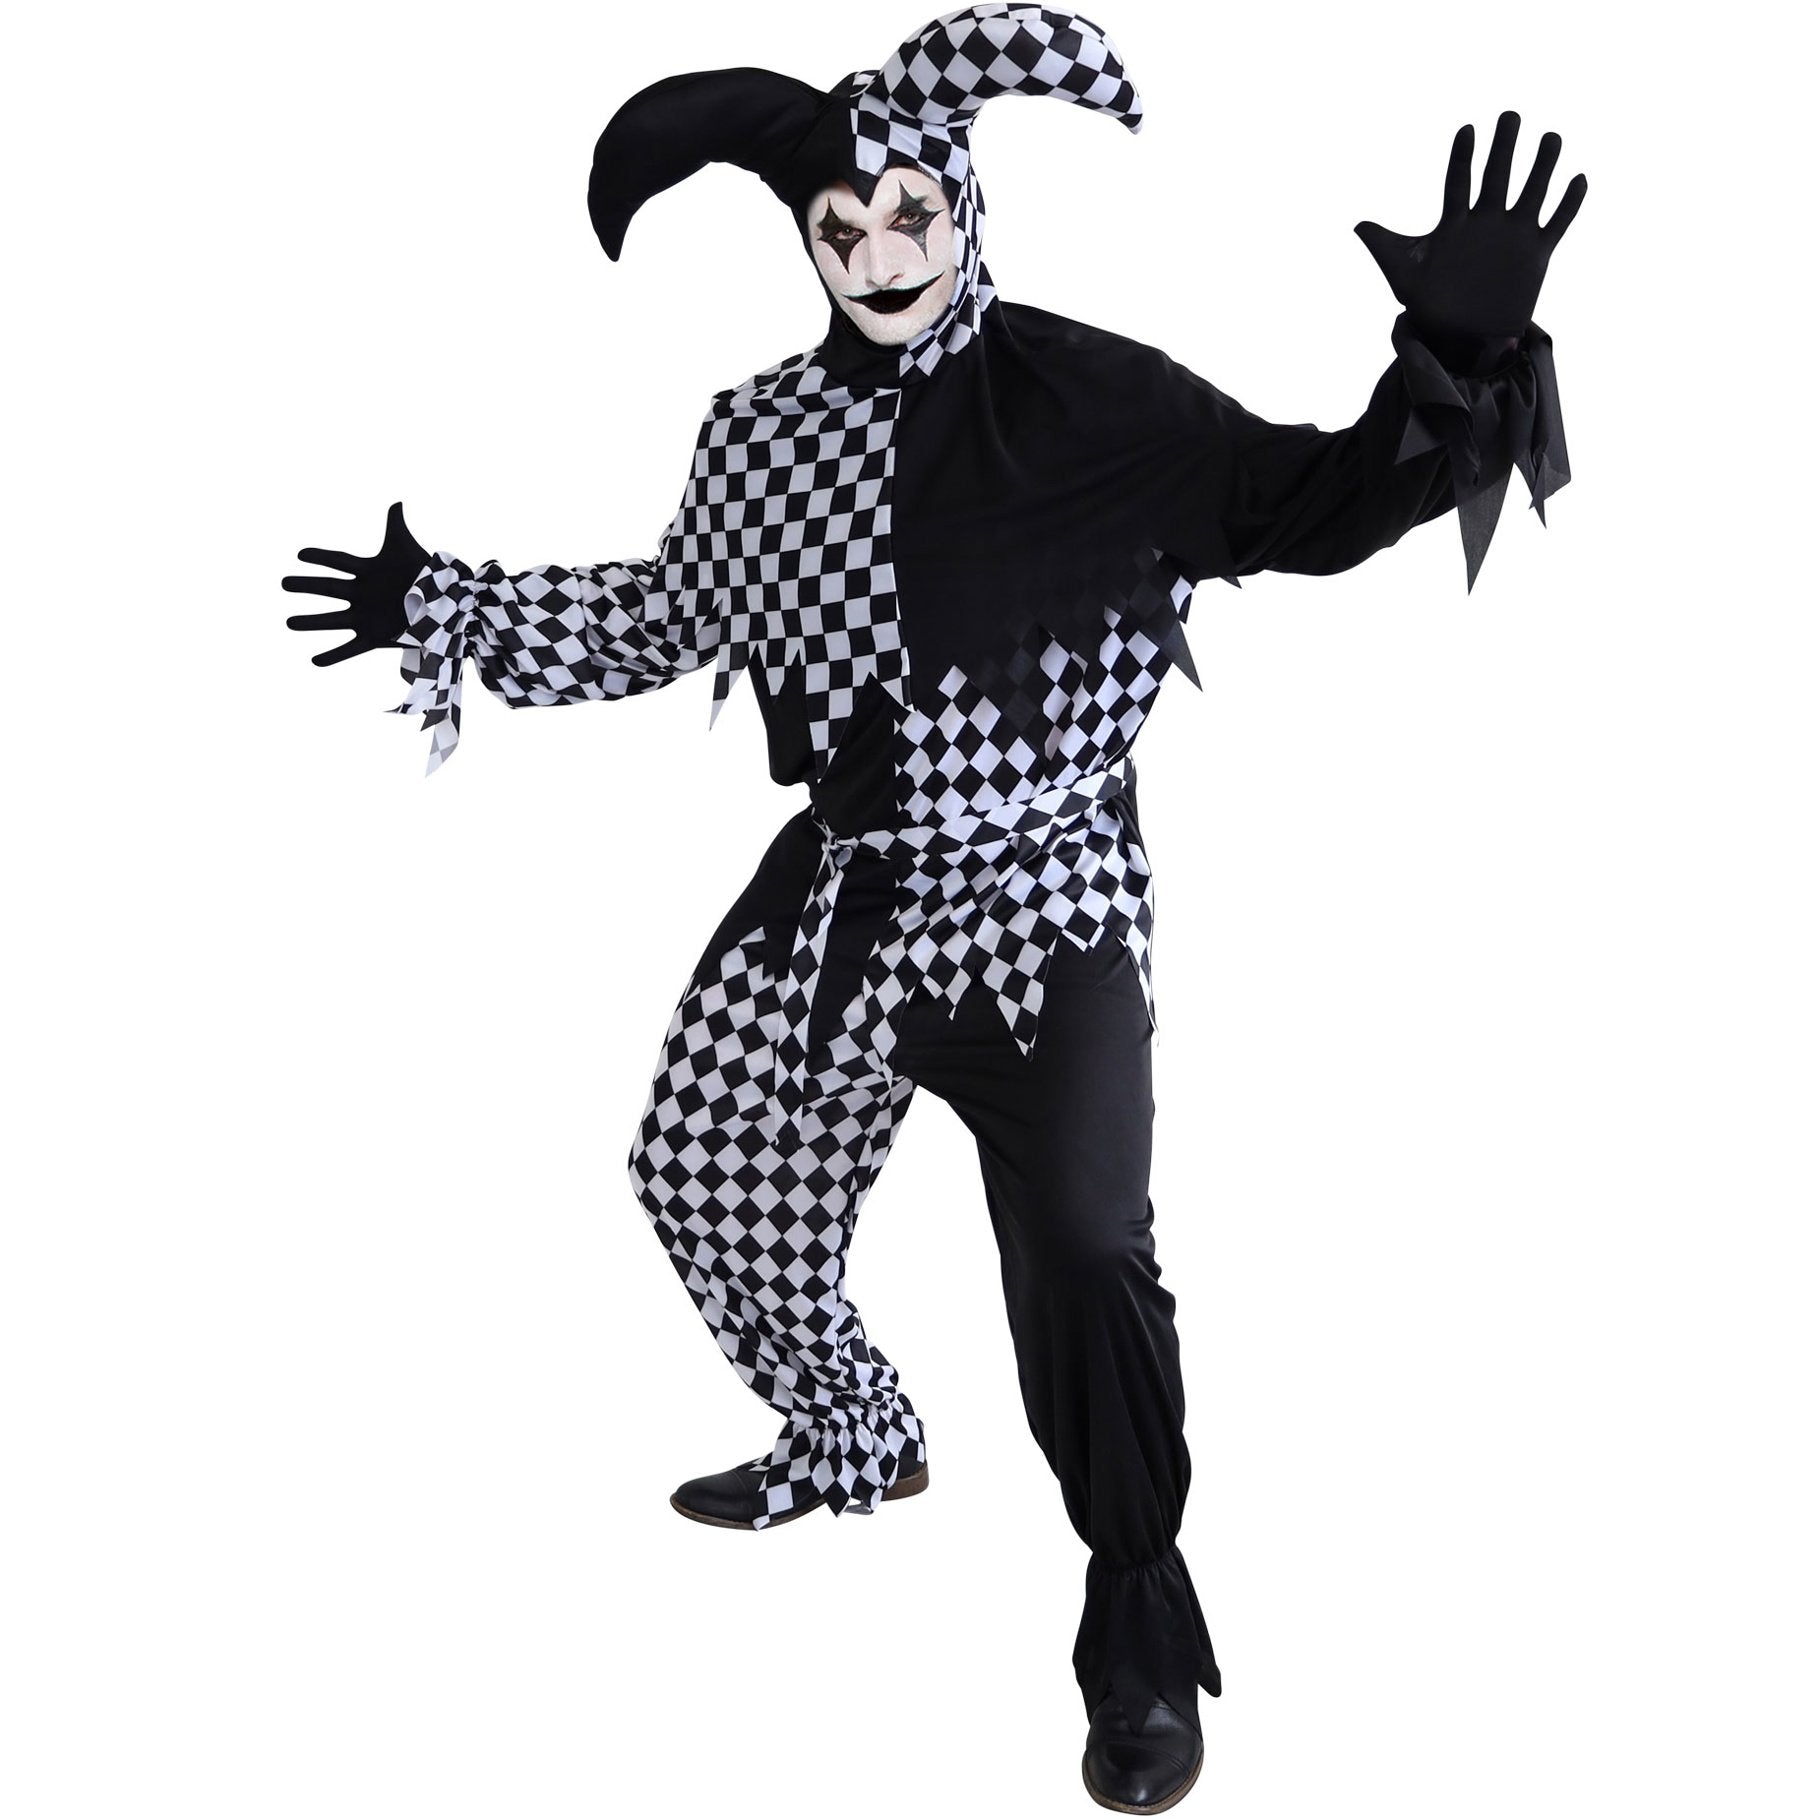 Costume Adult Jester Black & White Harlequin